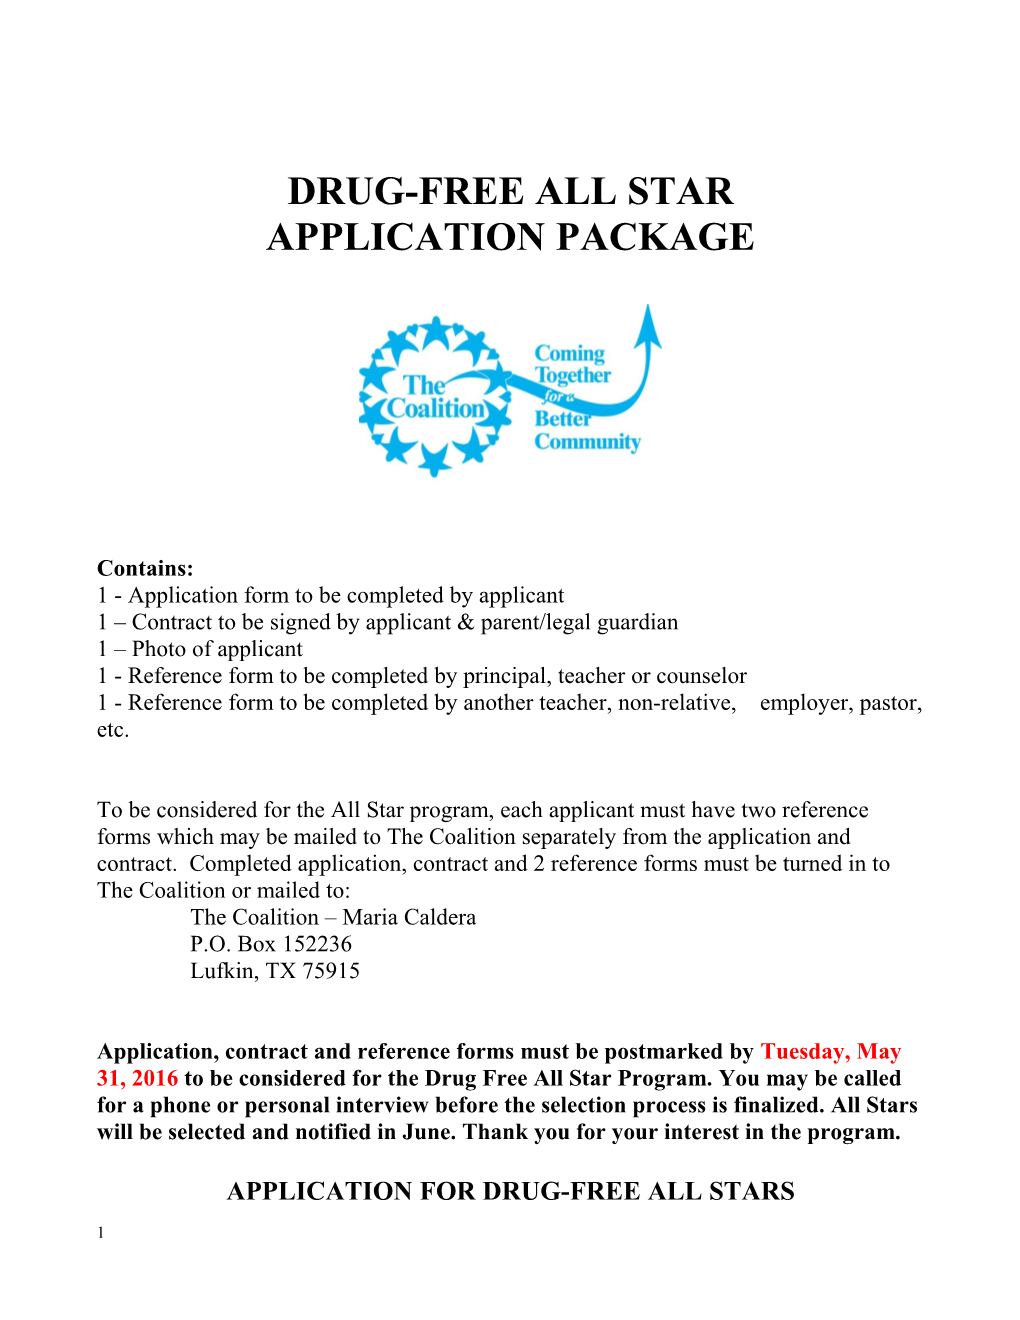 Application for Drug-Free All Star